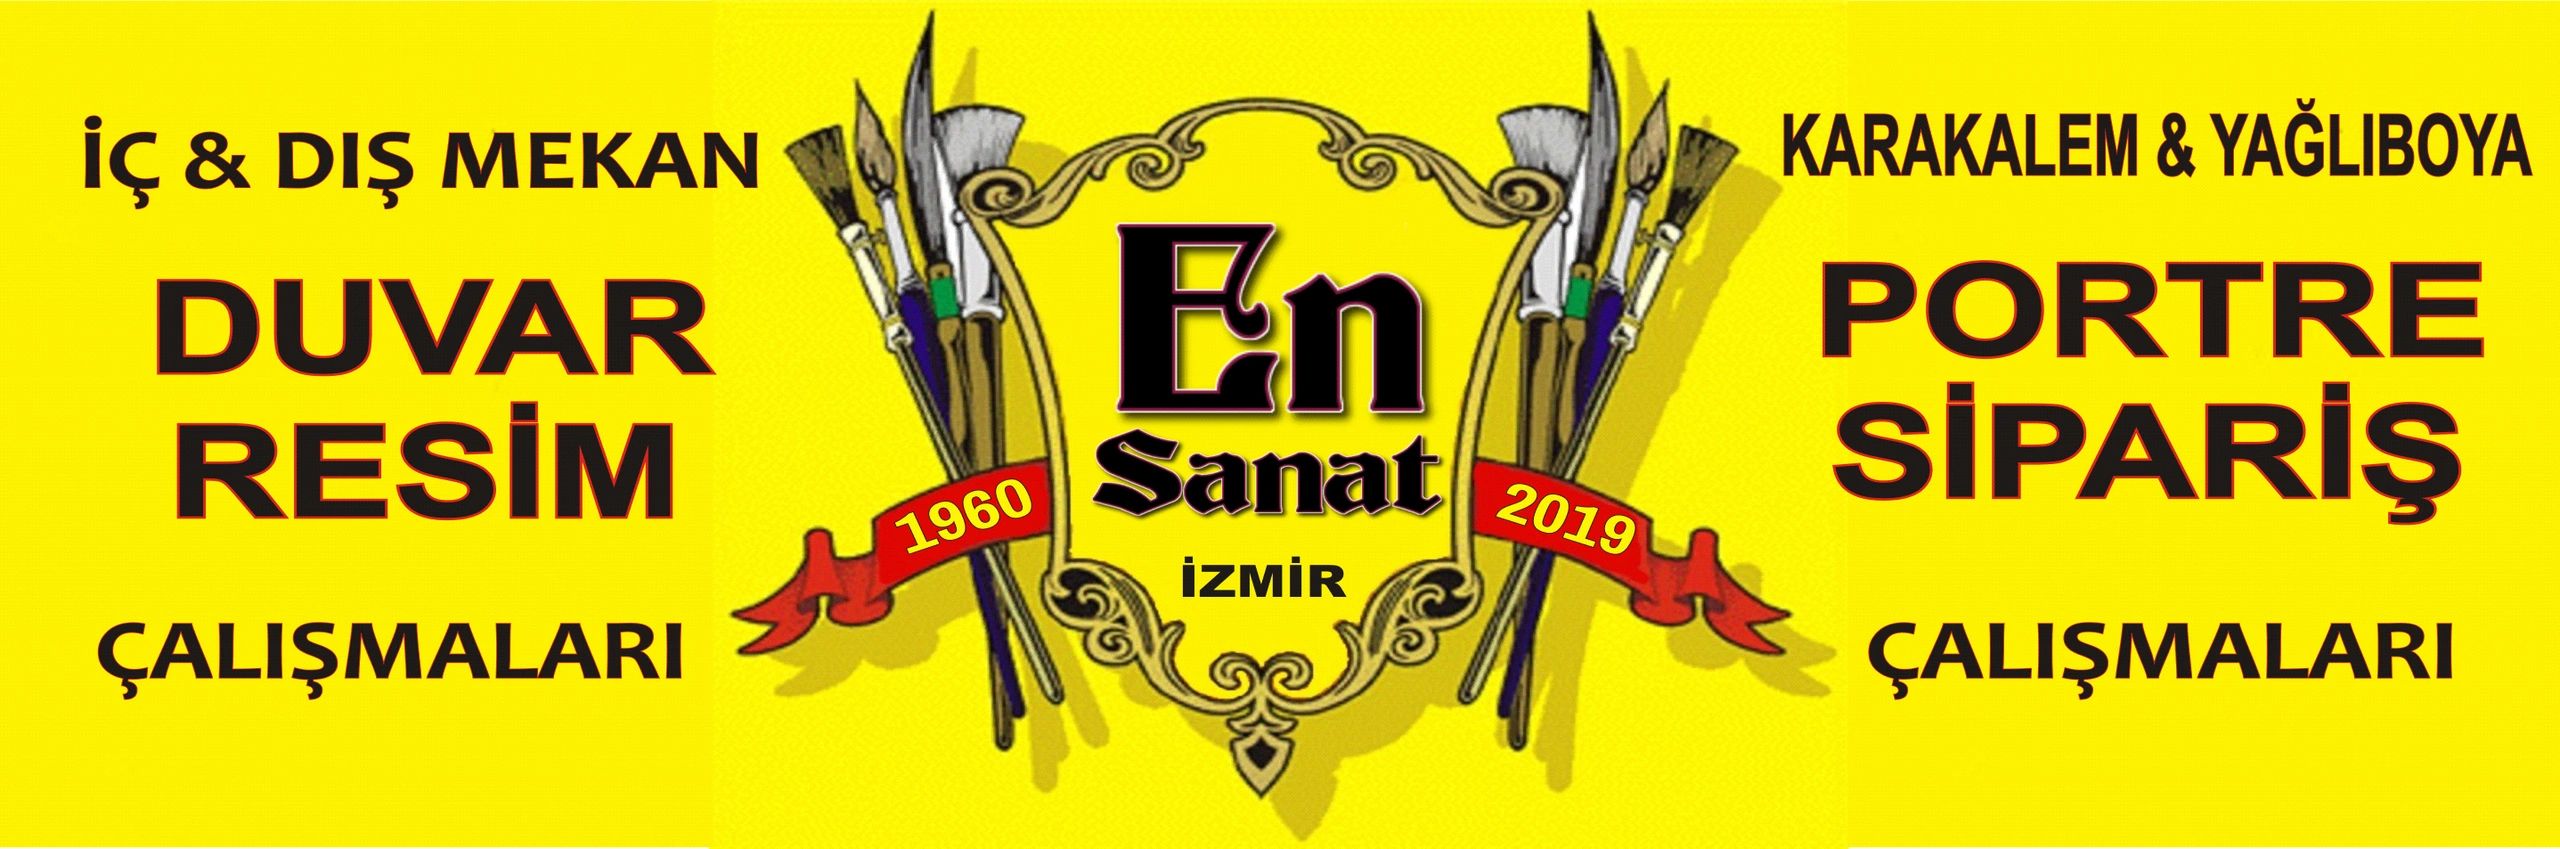 www.izmirressam.com